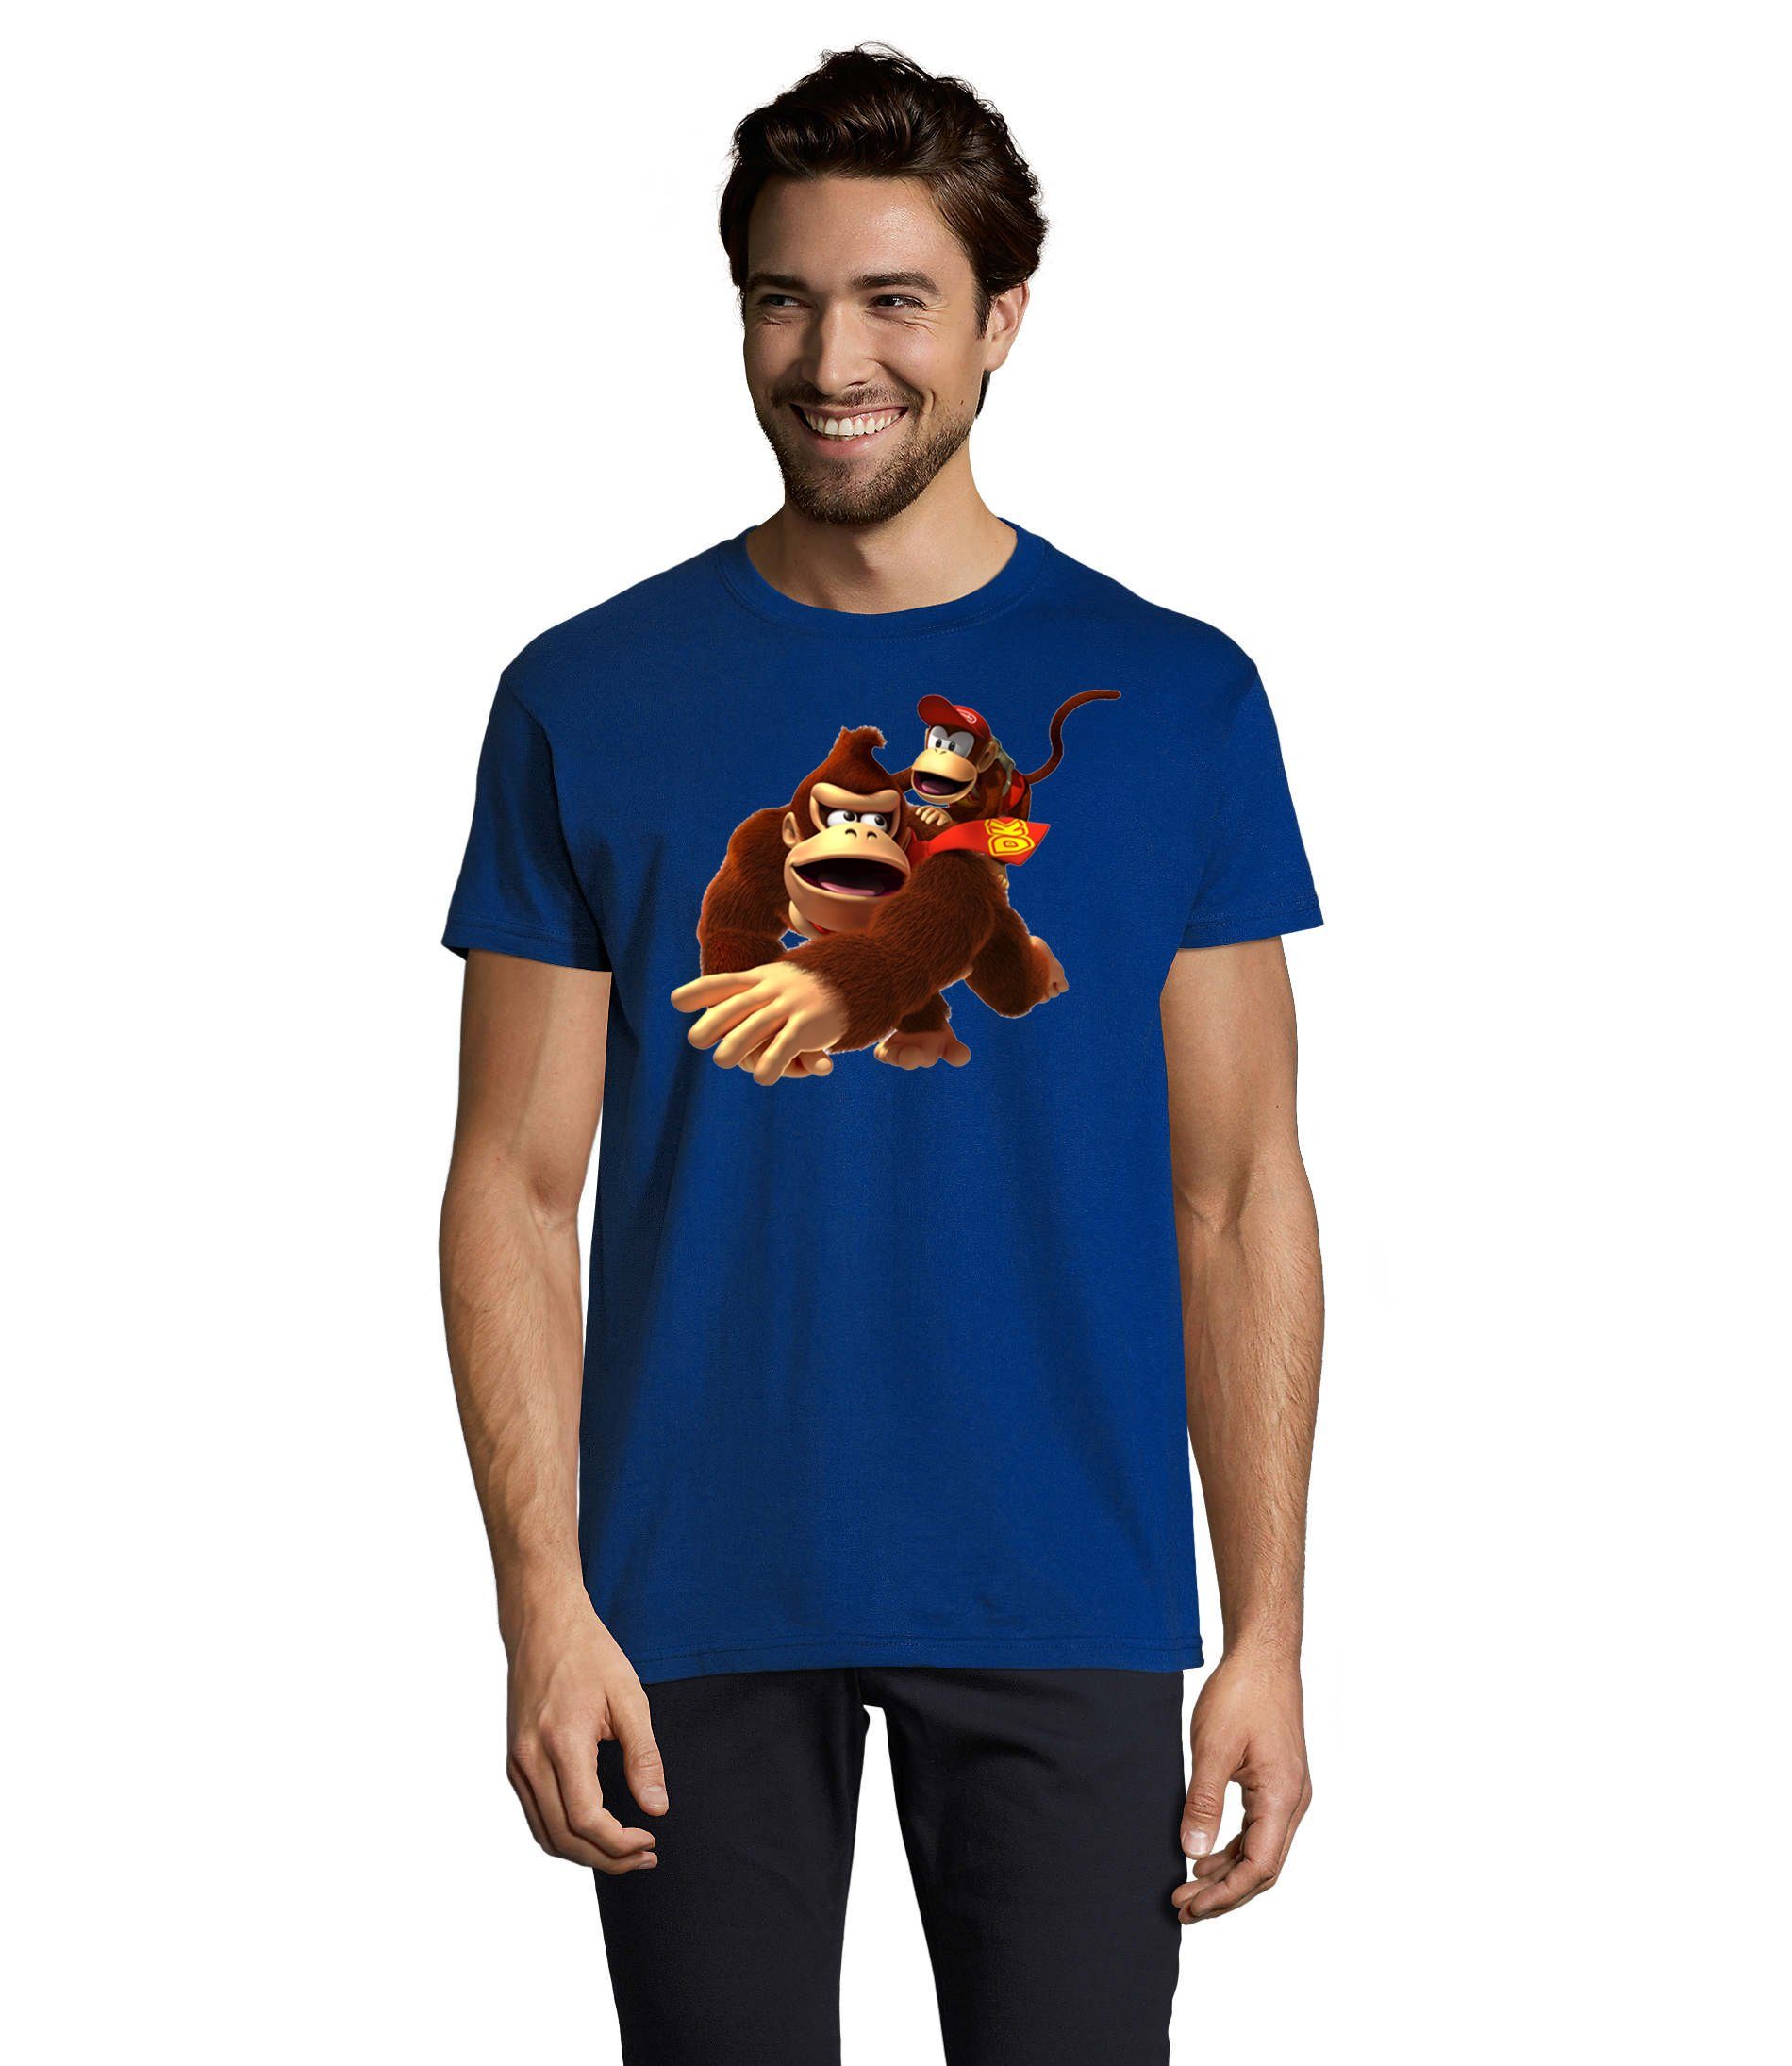 Blondie & Brownie T-Shirt Herren Donkey Diddy Kong Spiele Konsole Nerd Nintendo Blau